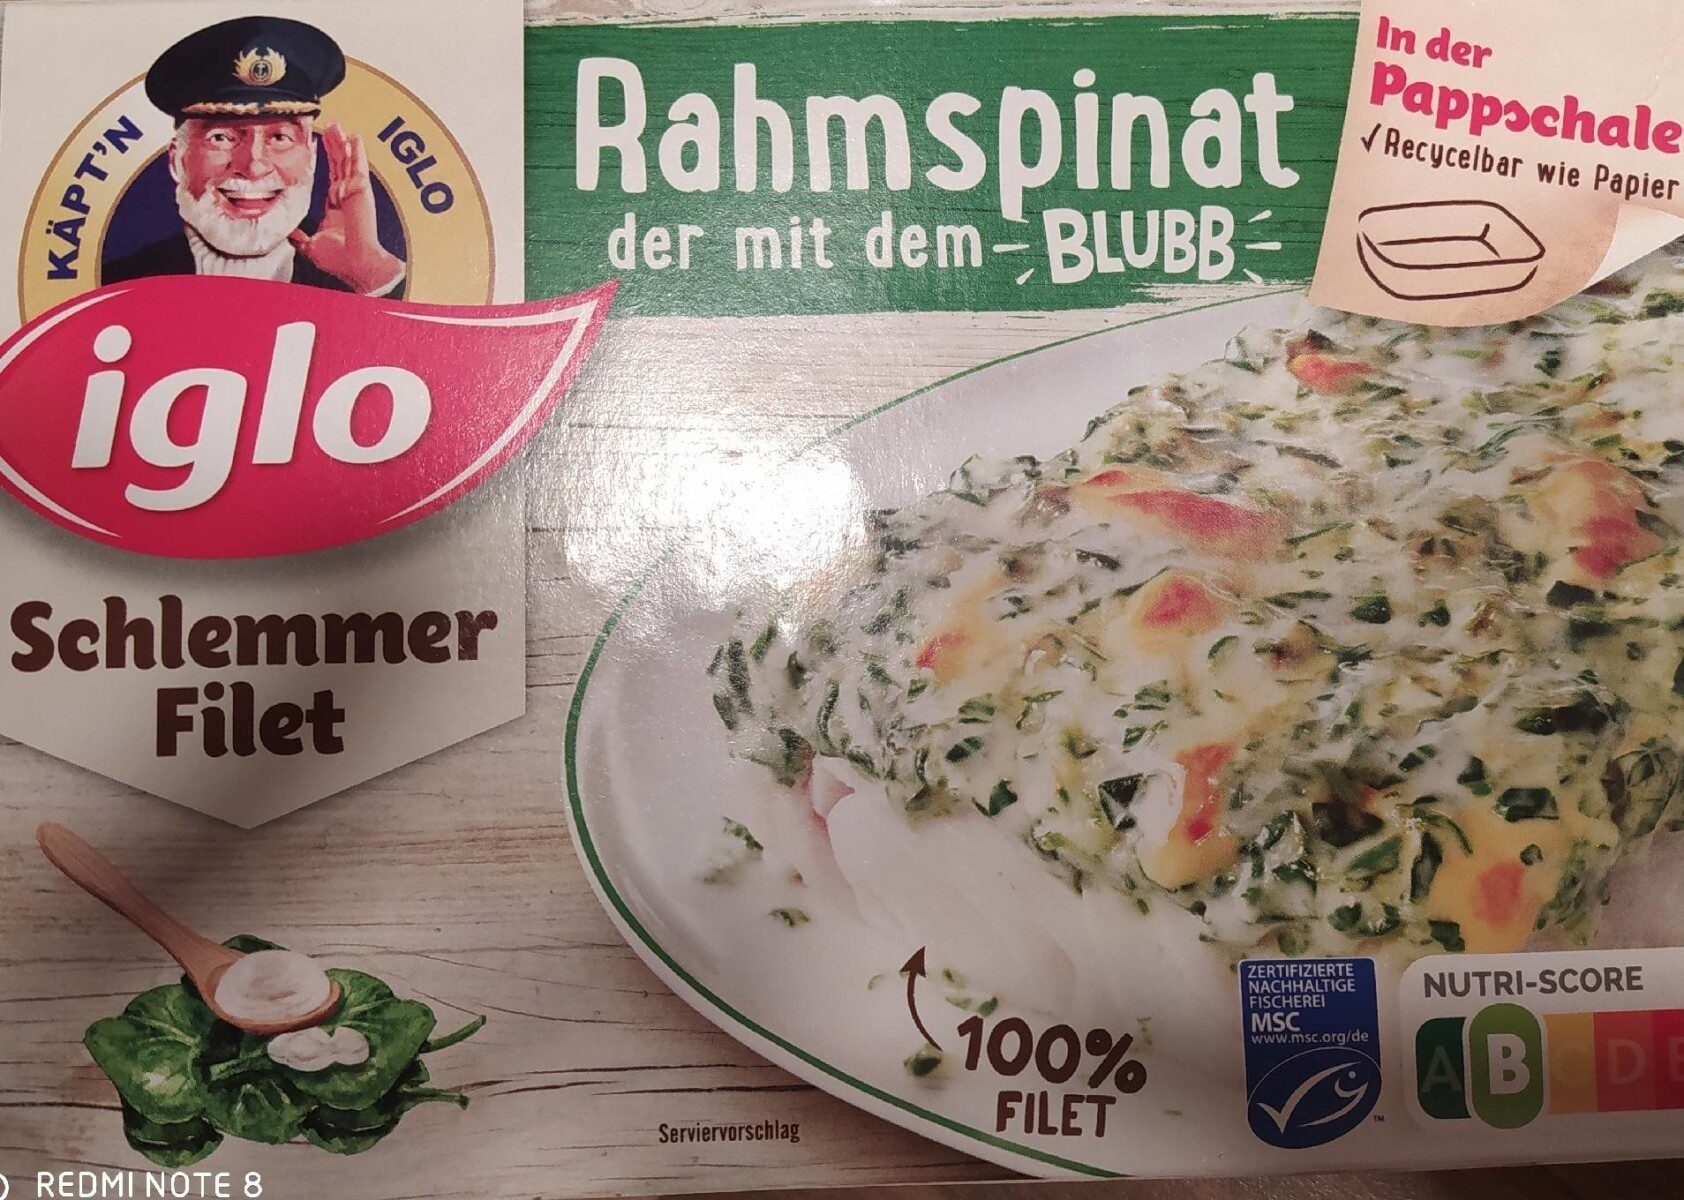 Schlemmer-Filet Rahmspinat - Der mit dem Blubb - Produkt